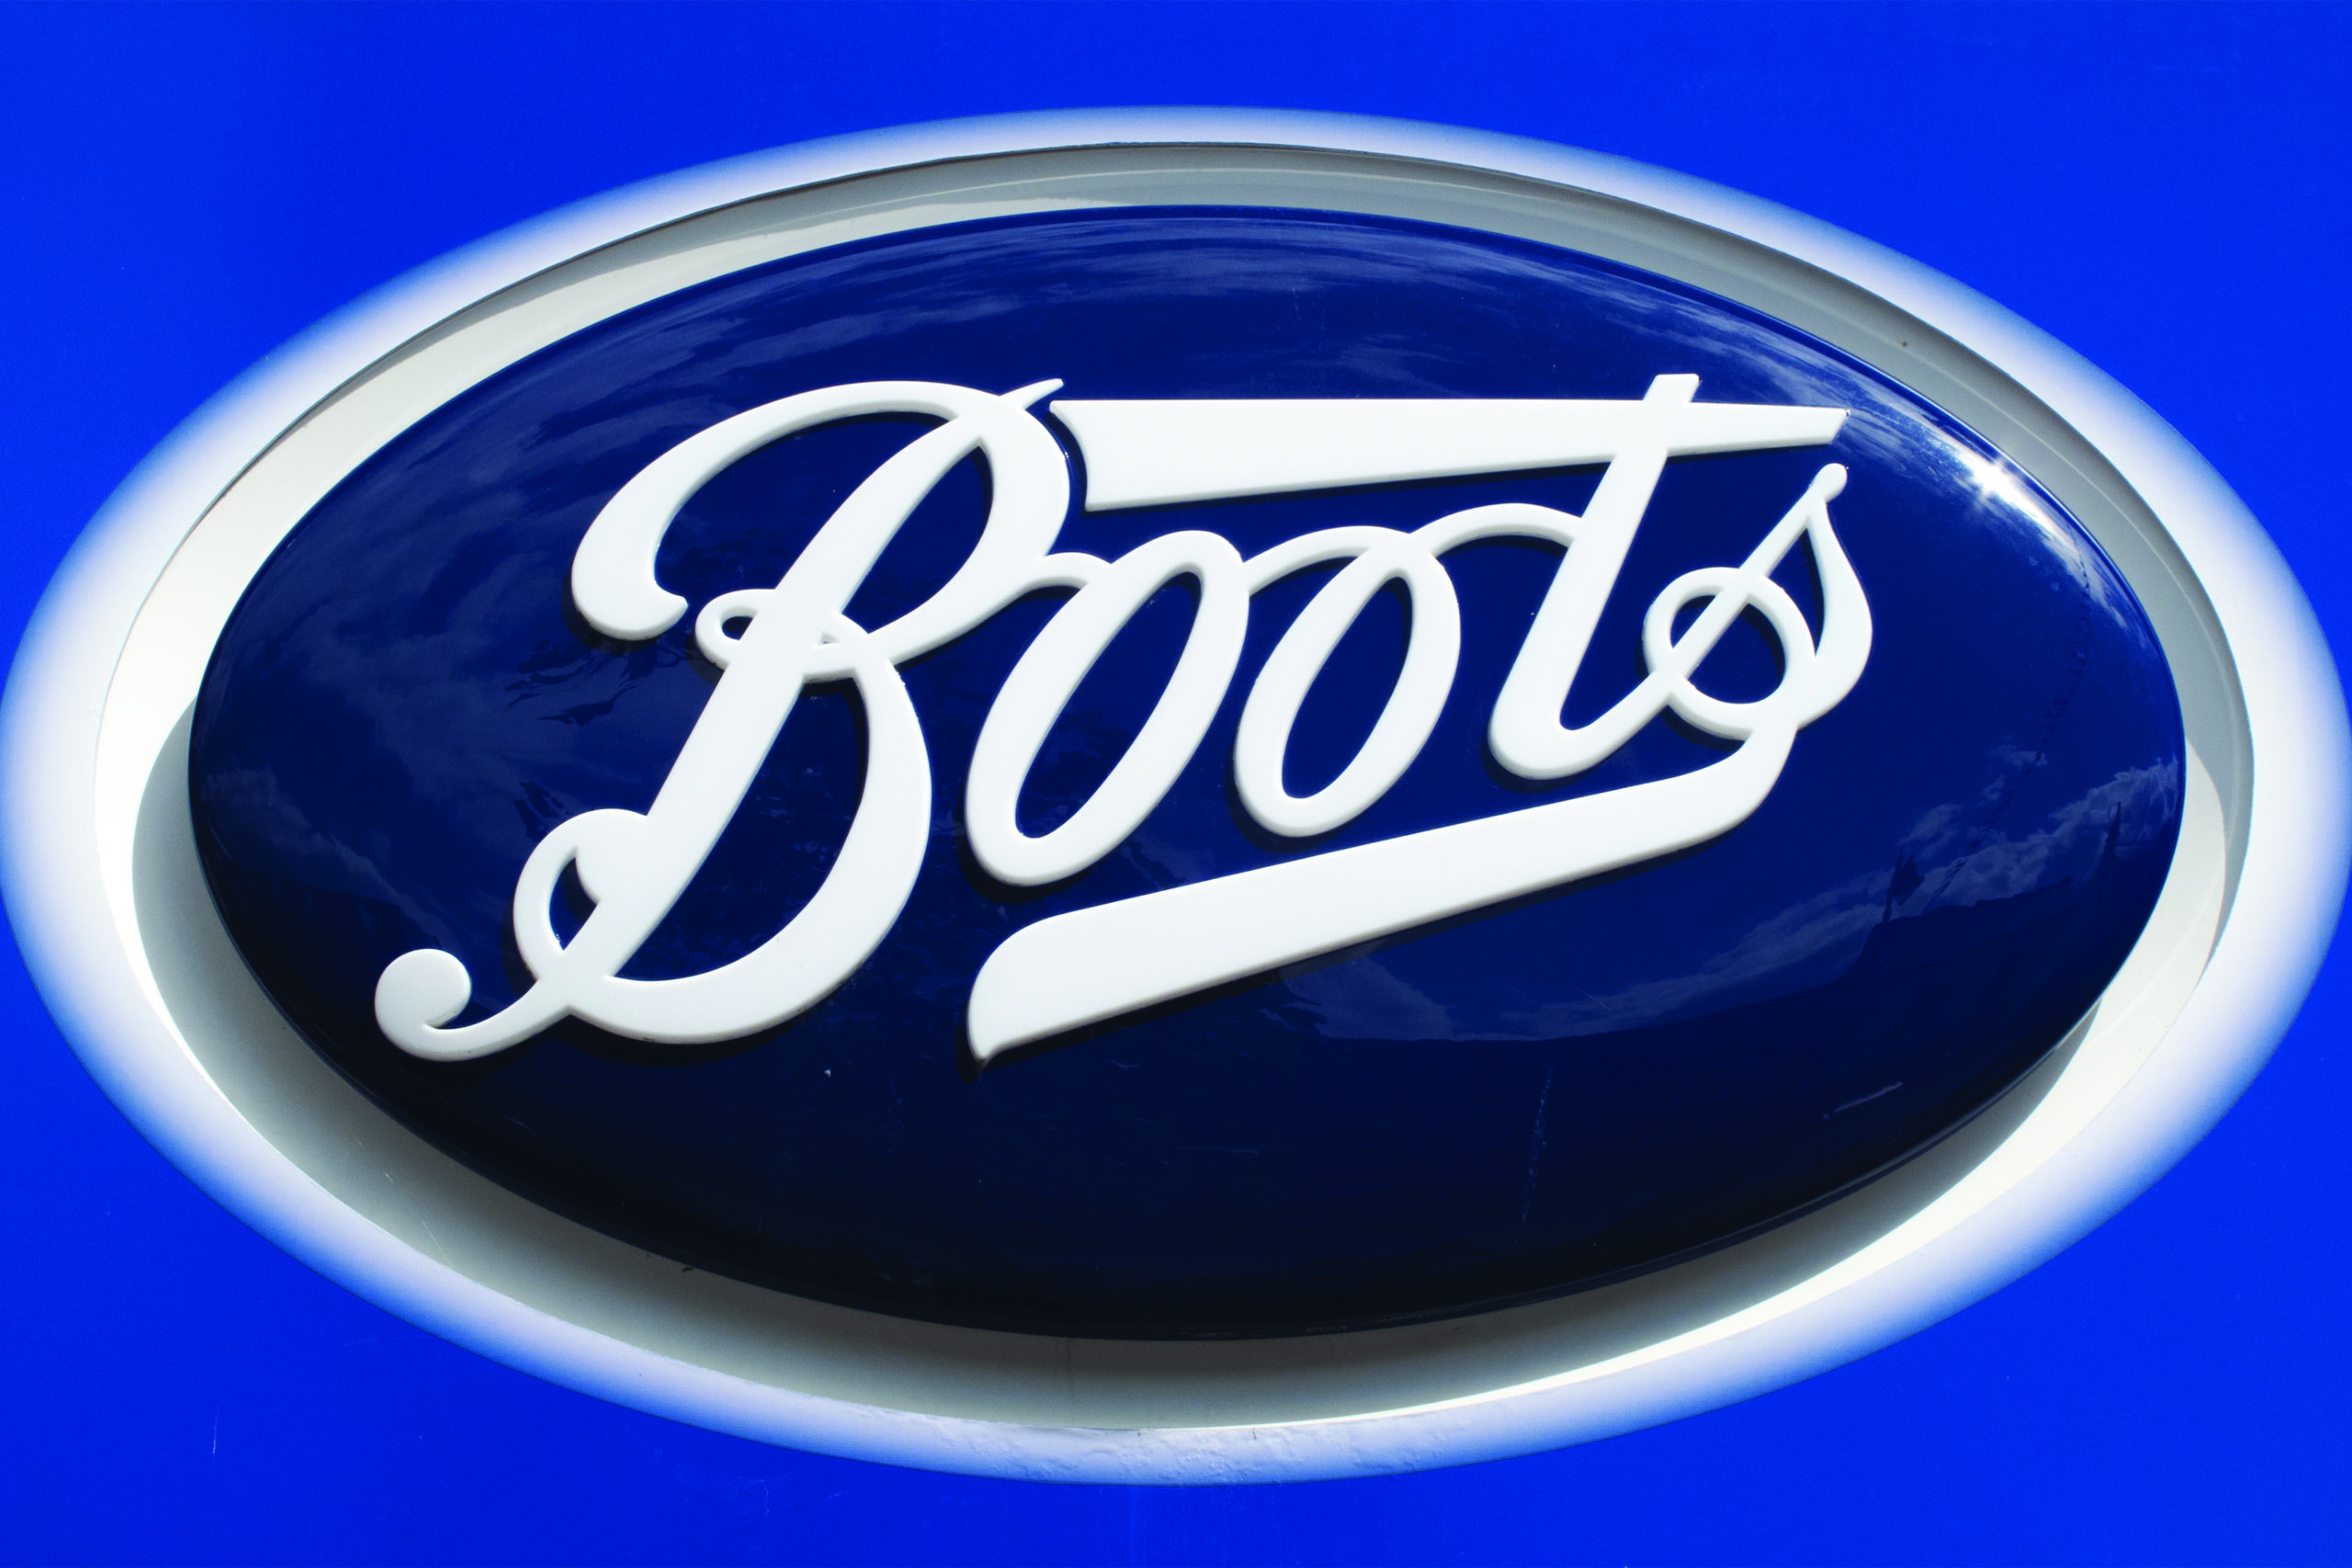 Boots uk logo. Boots uk London 'logo. Boot wait